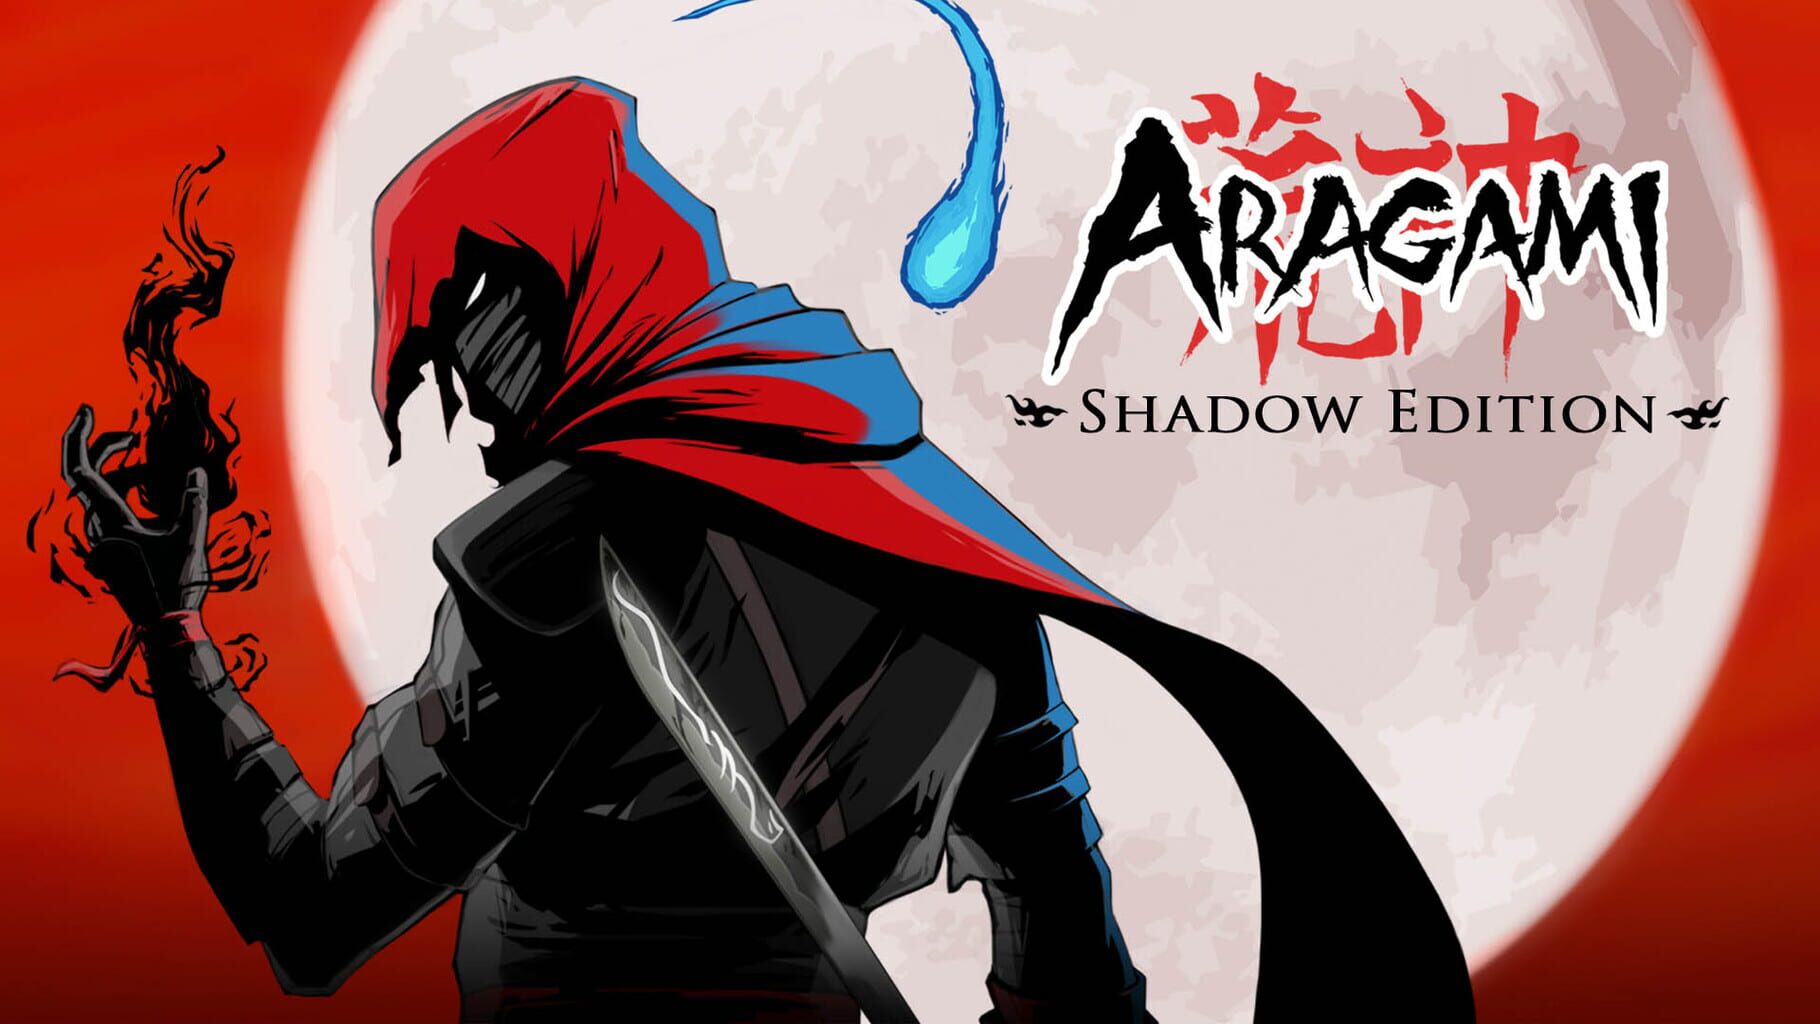 Aragami: Shadow Edition artwork